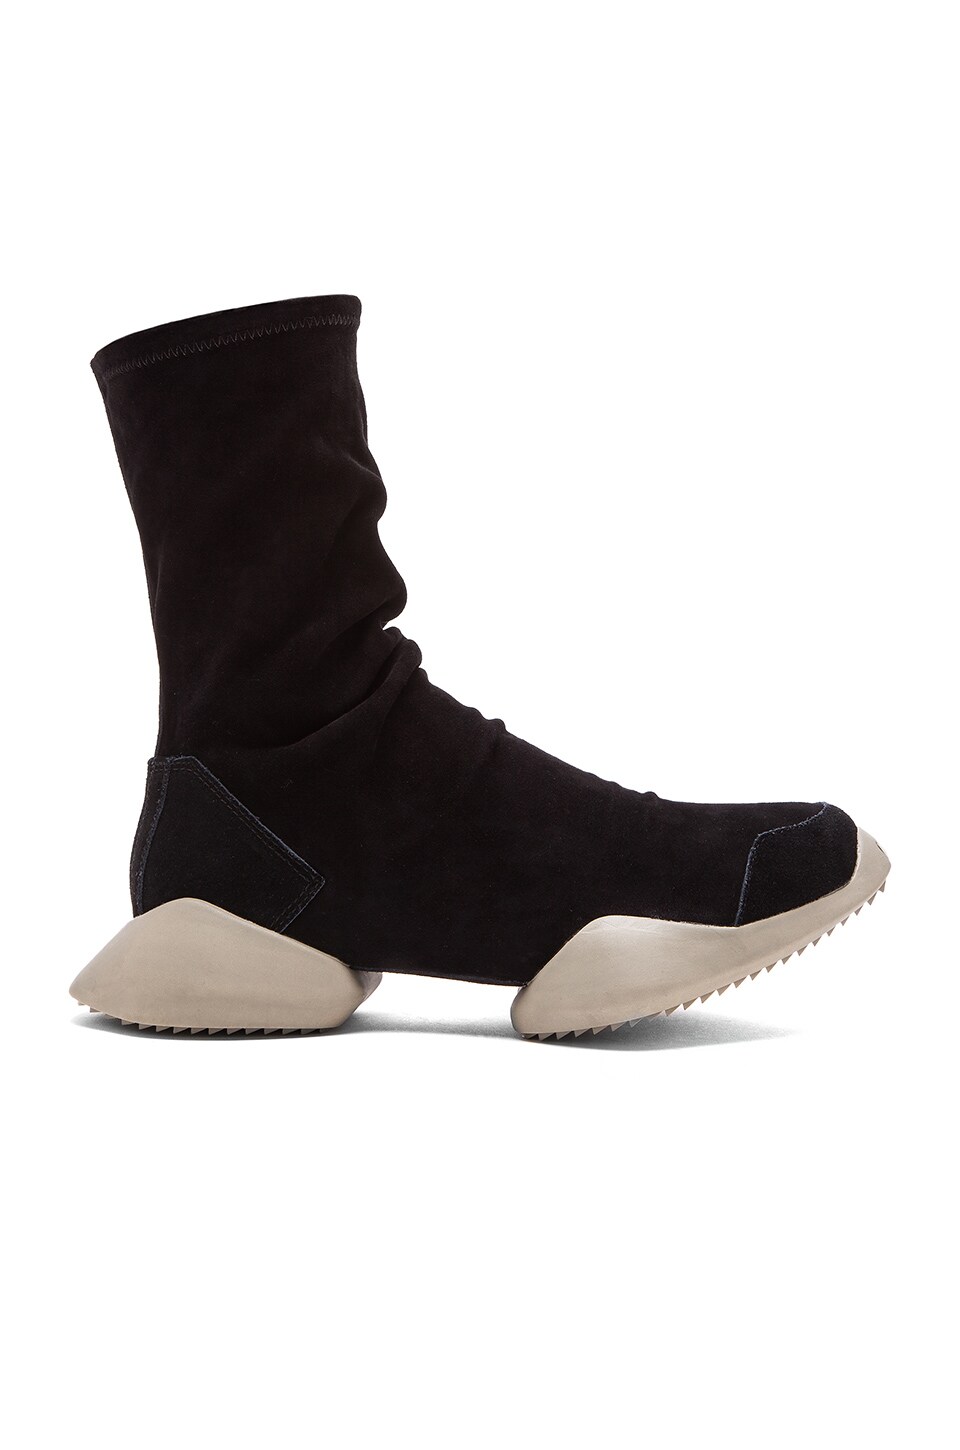 adidas by Rick Owens RO Runner Ankle Boot in Black Black RO Milk | REVOLVE